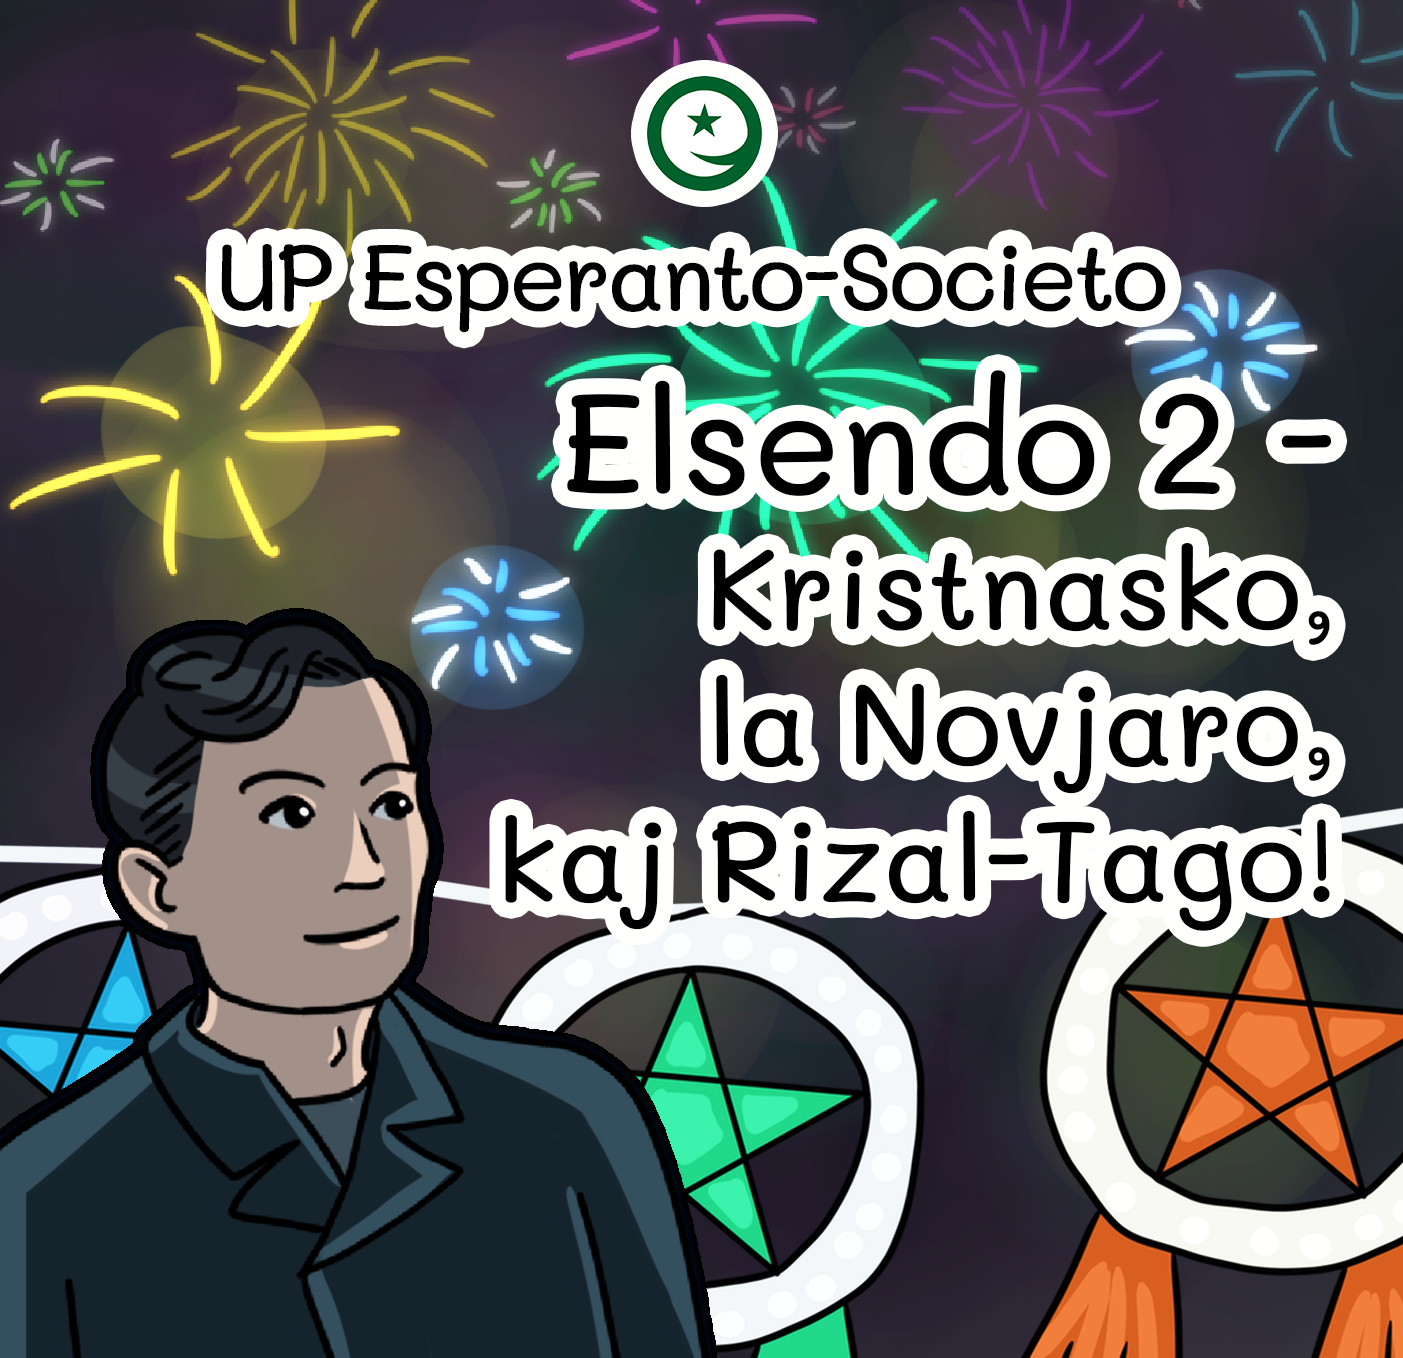 [Speciala] Podkasto 002: Kristnasko, la Novjaro, kaj Rizal-Tago!